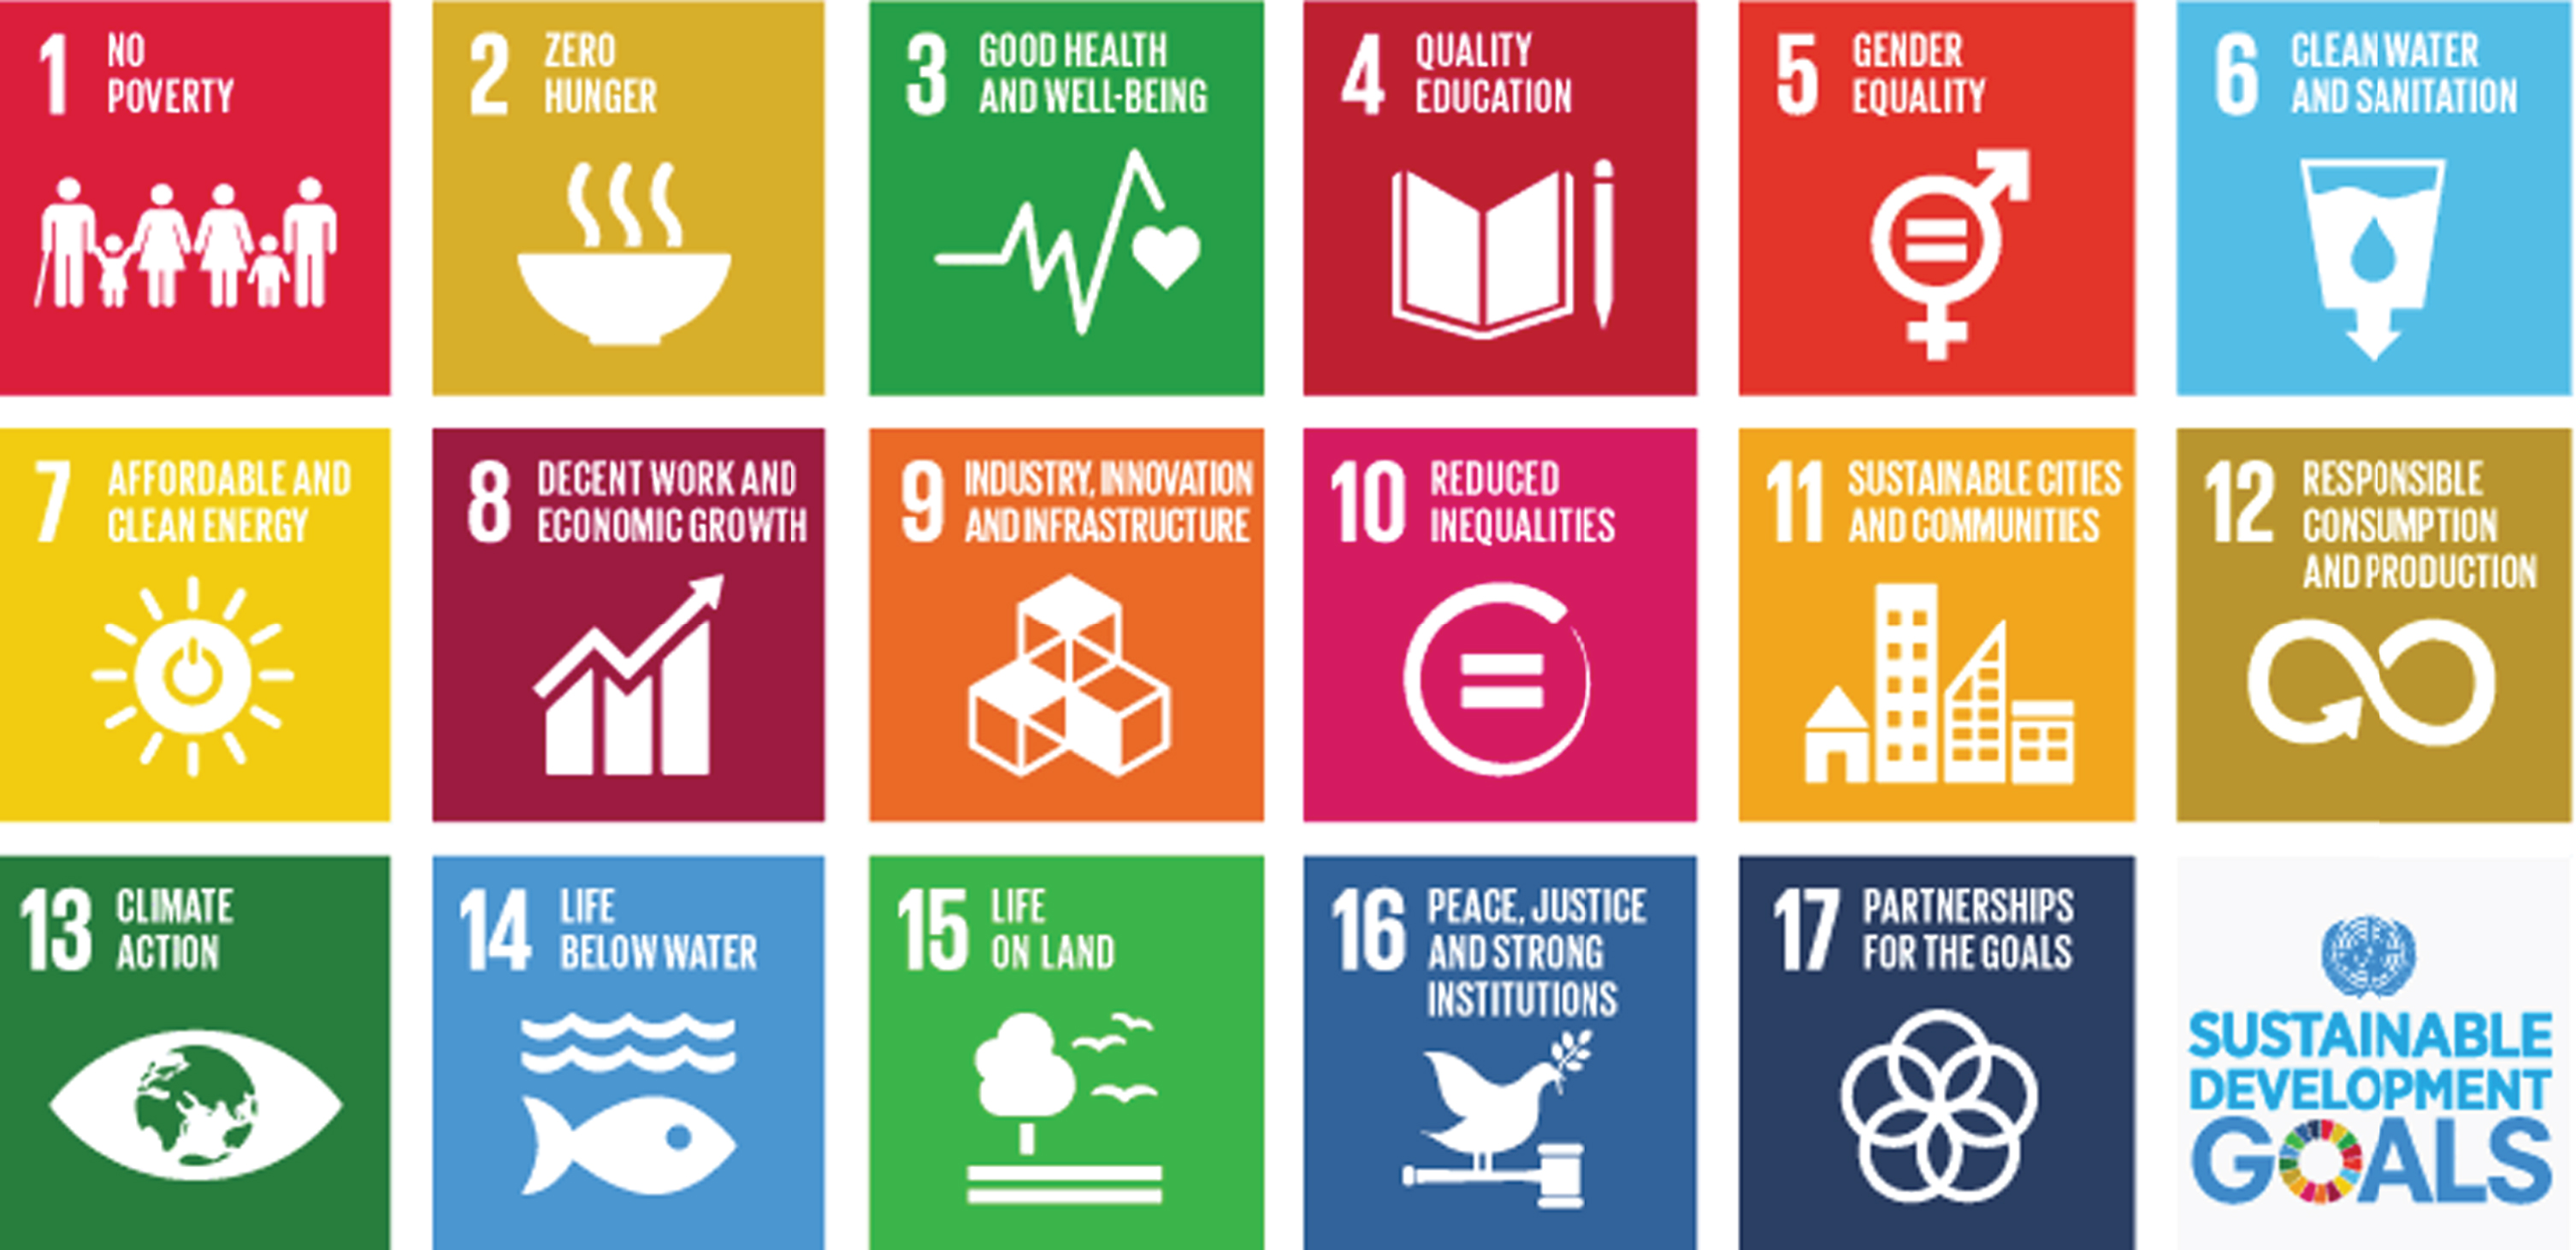 17 sustainable development goals.